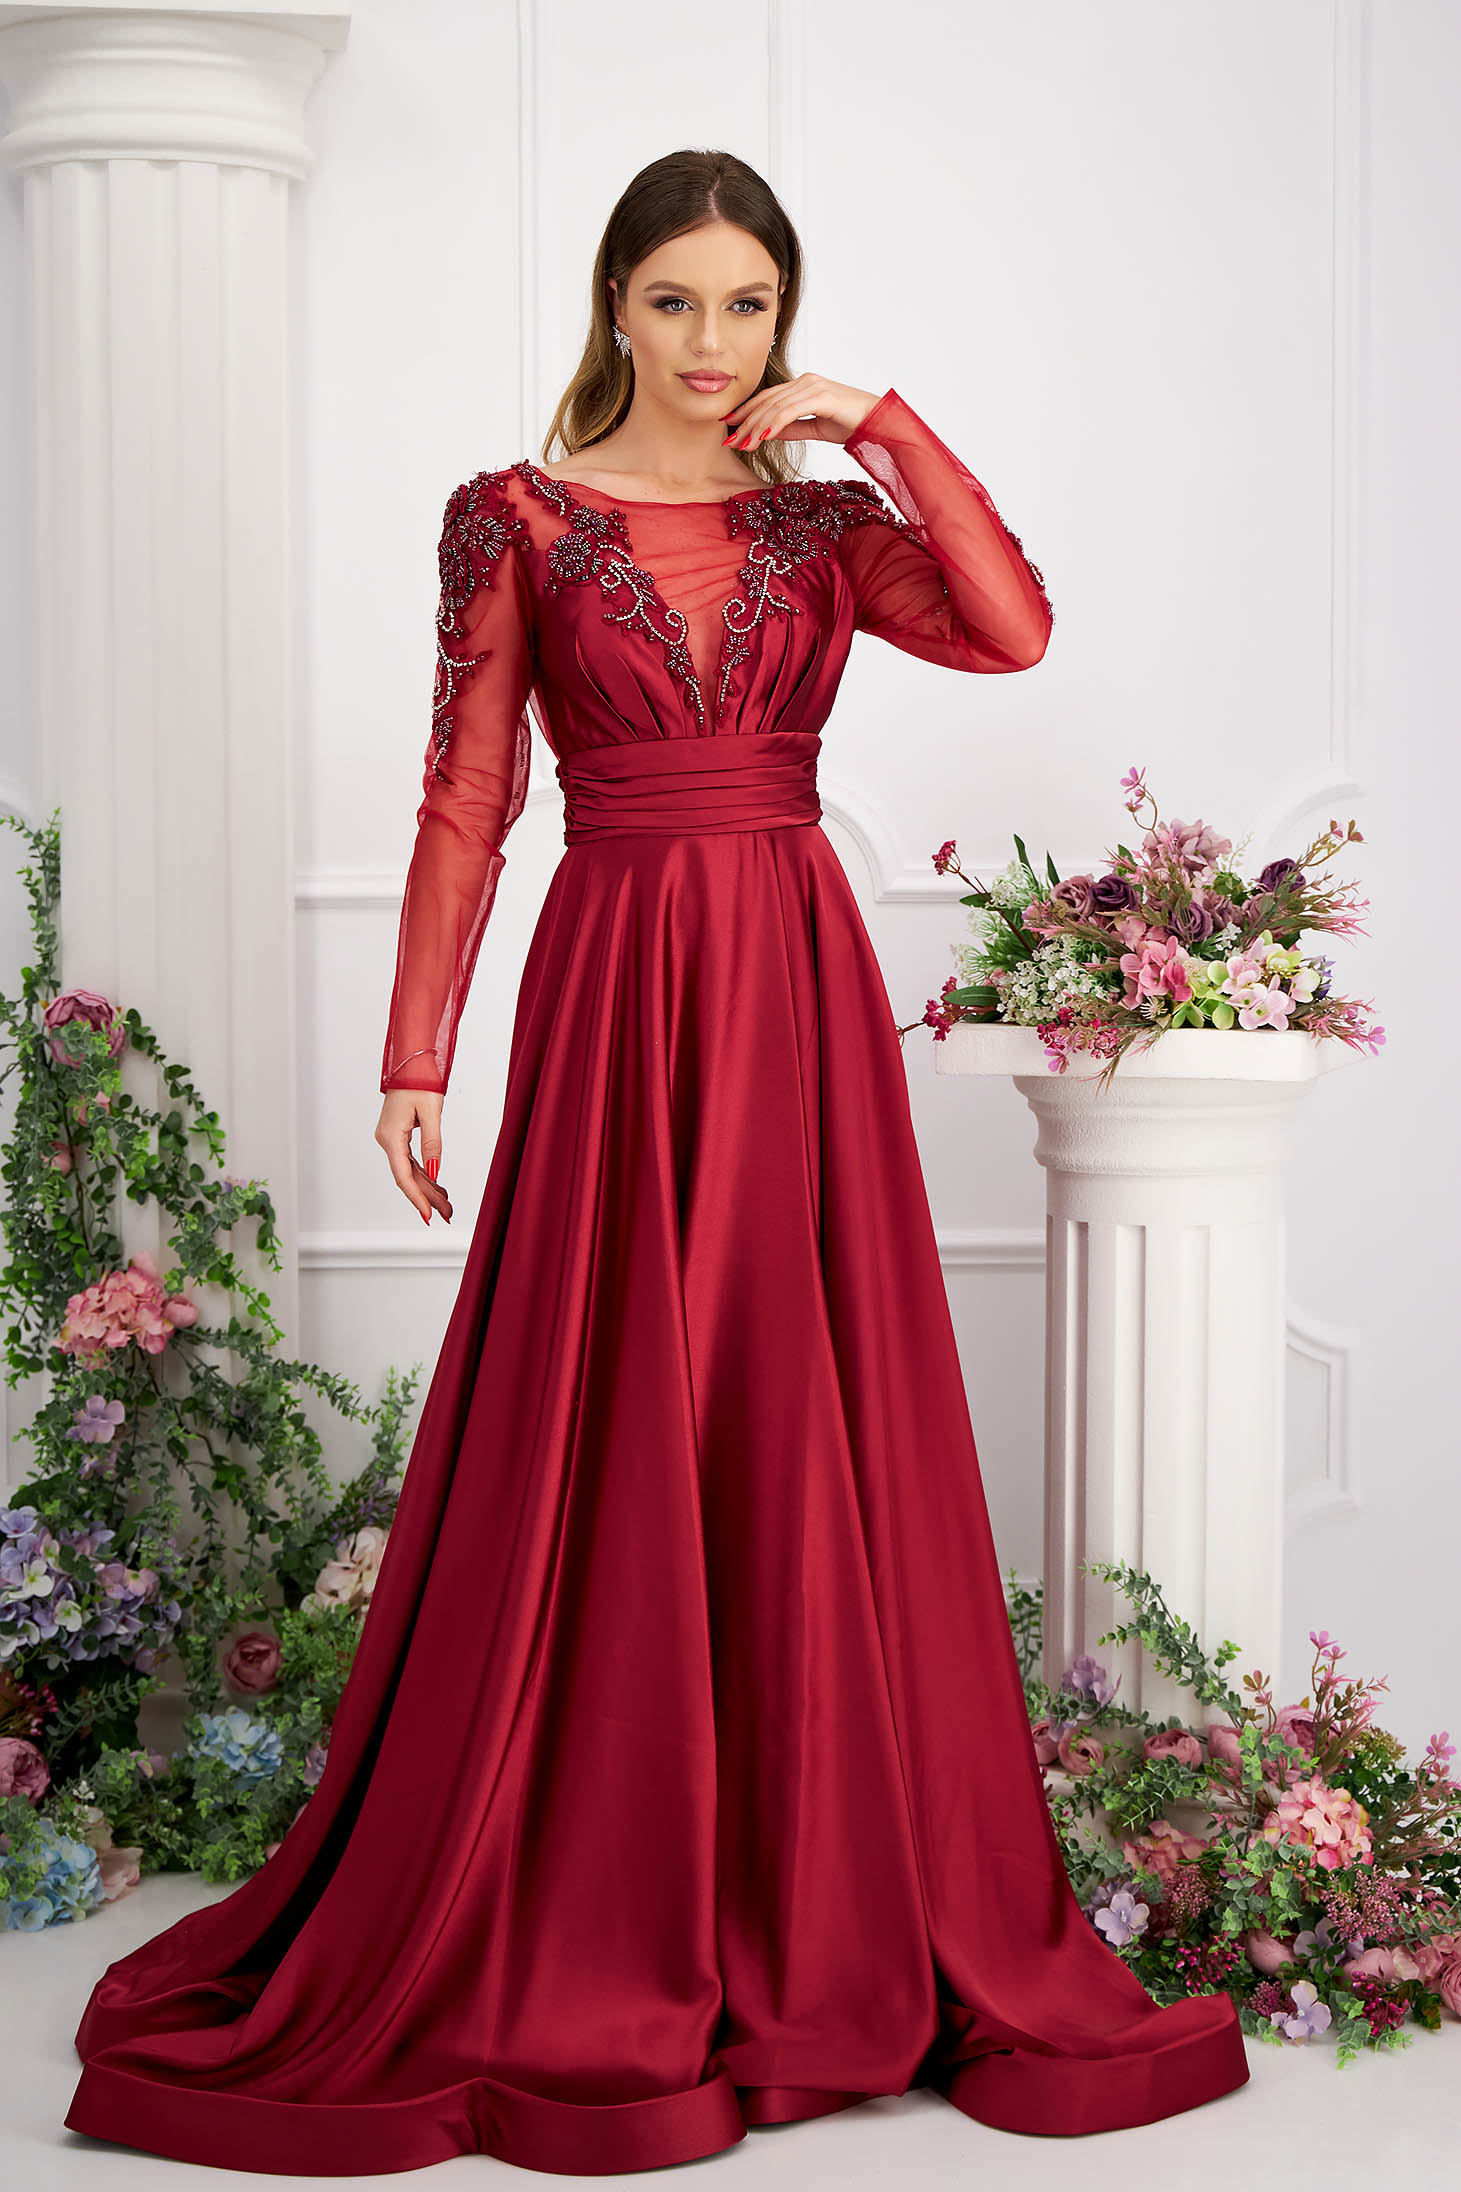 Burgundy dress taffeta long cloche with lace details v back neckline